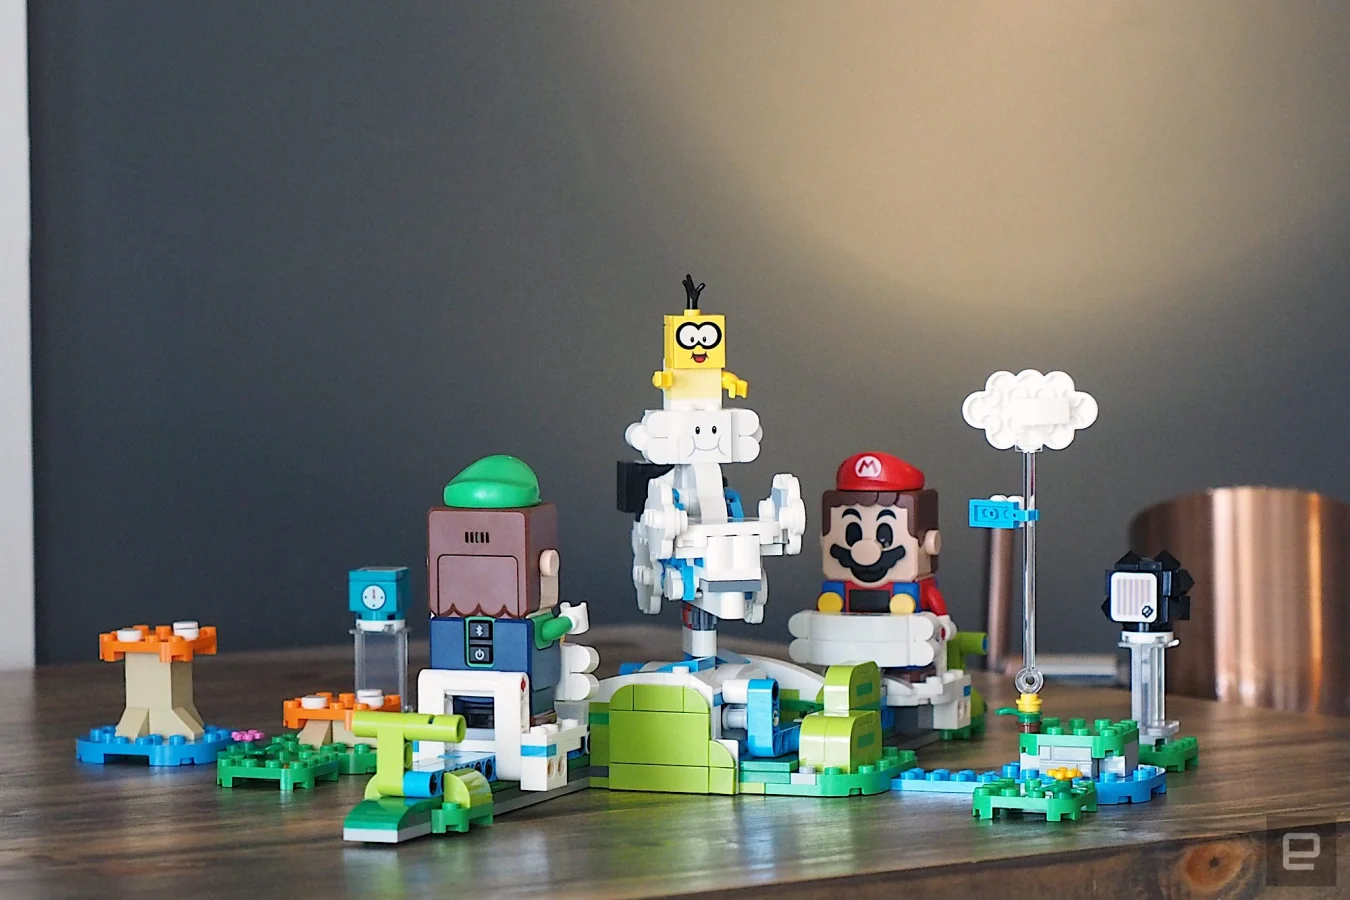 Image of the Sky Palace Lego Mario expansion set